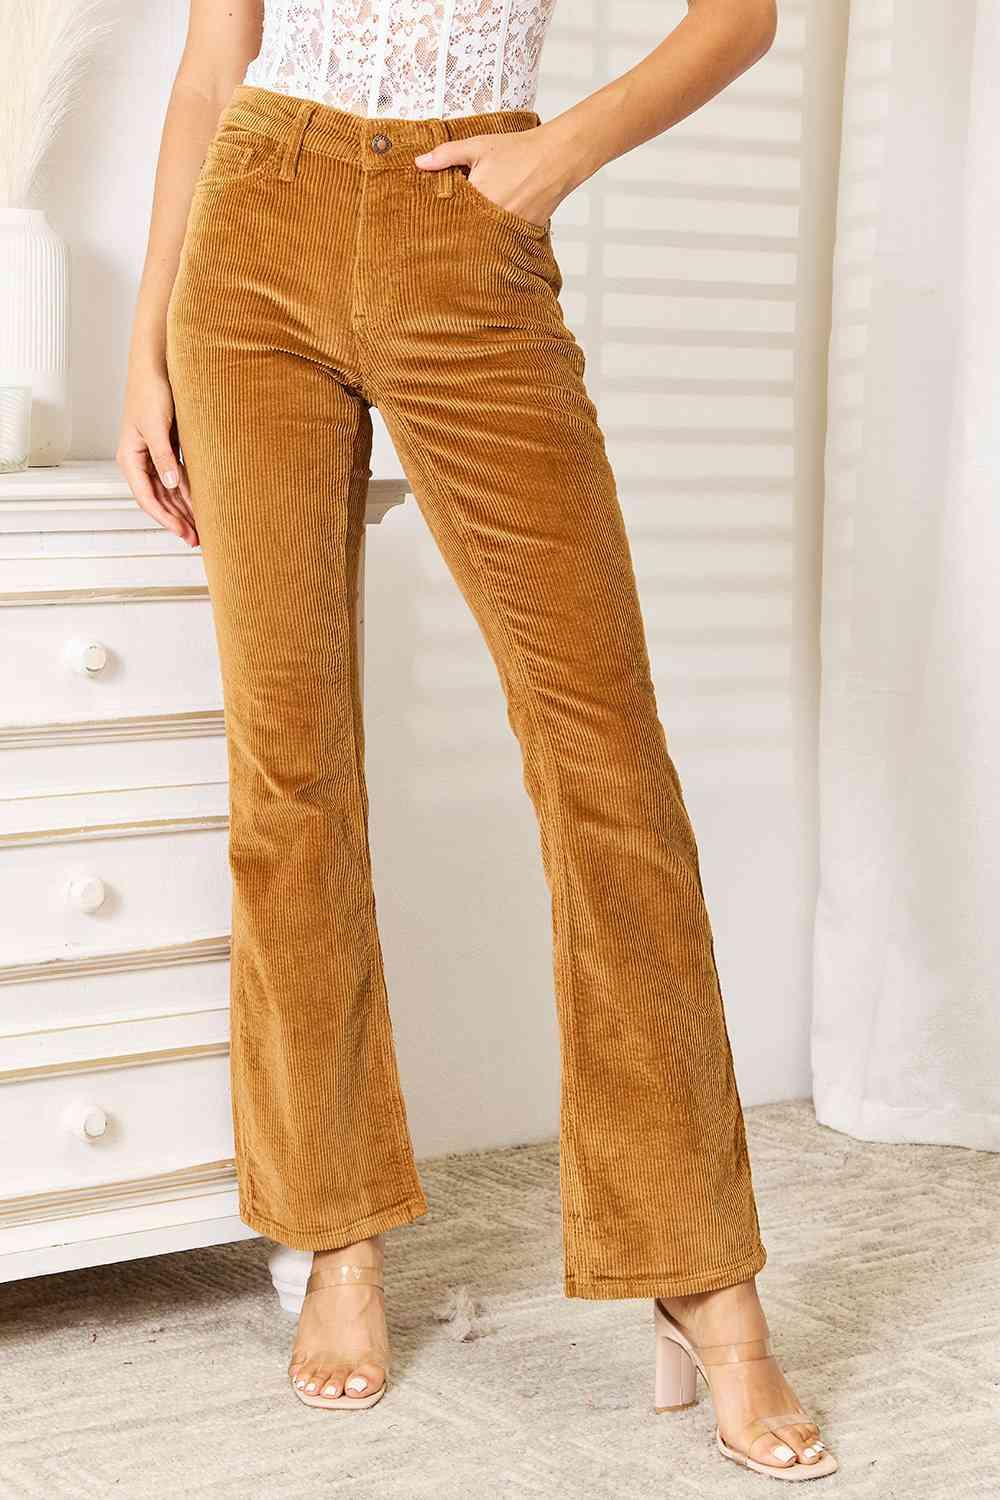 Bona Fide Fashion - Full Size Mid Rise Corduroy Pants - Women Fashion - Bona Fide Fashion